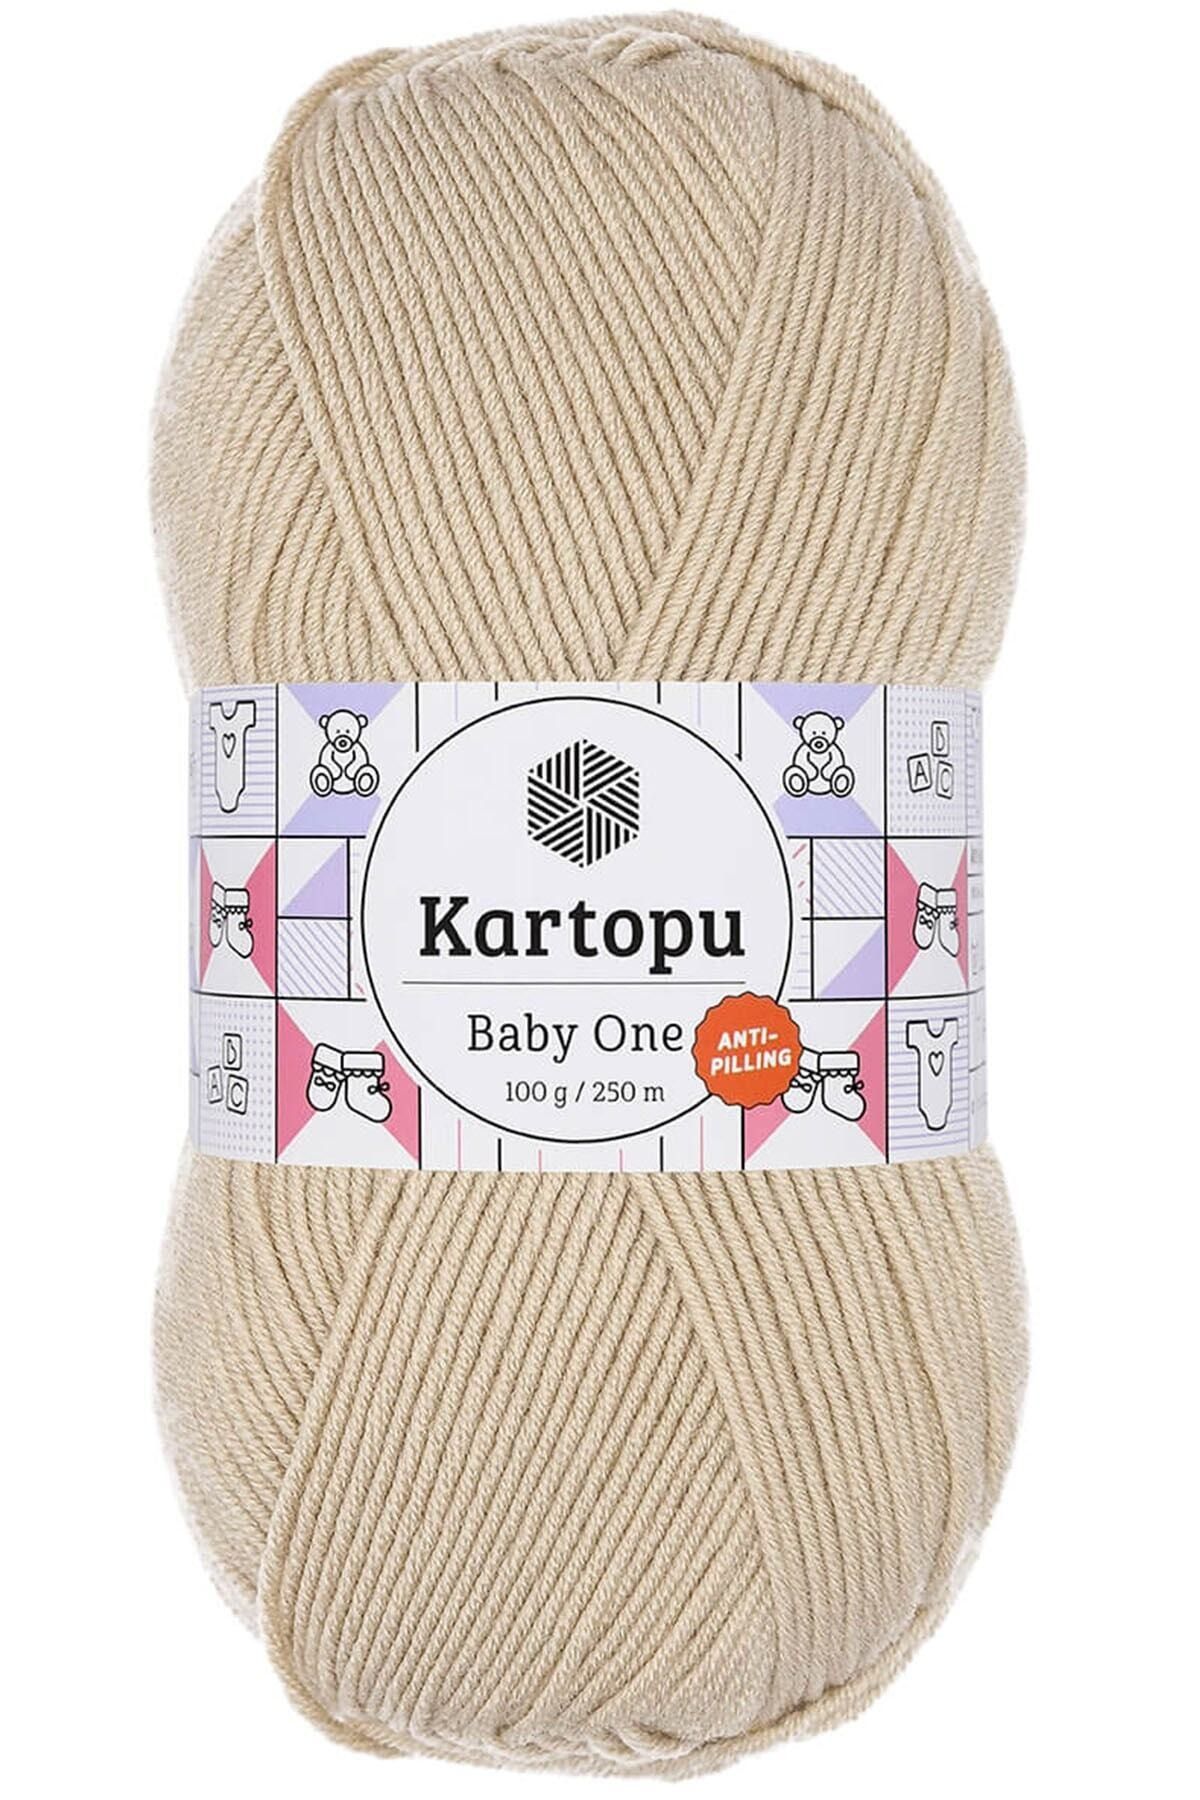 Kartopu Baby One Tüylenmeyen Bebek Yünü Taş Rengi K855